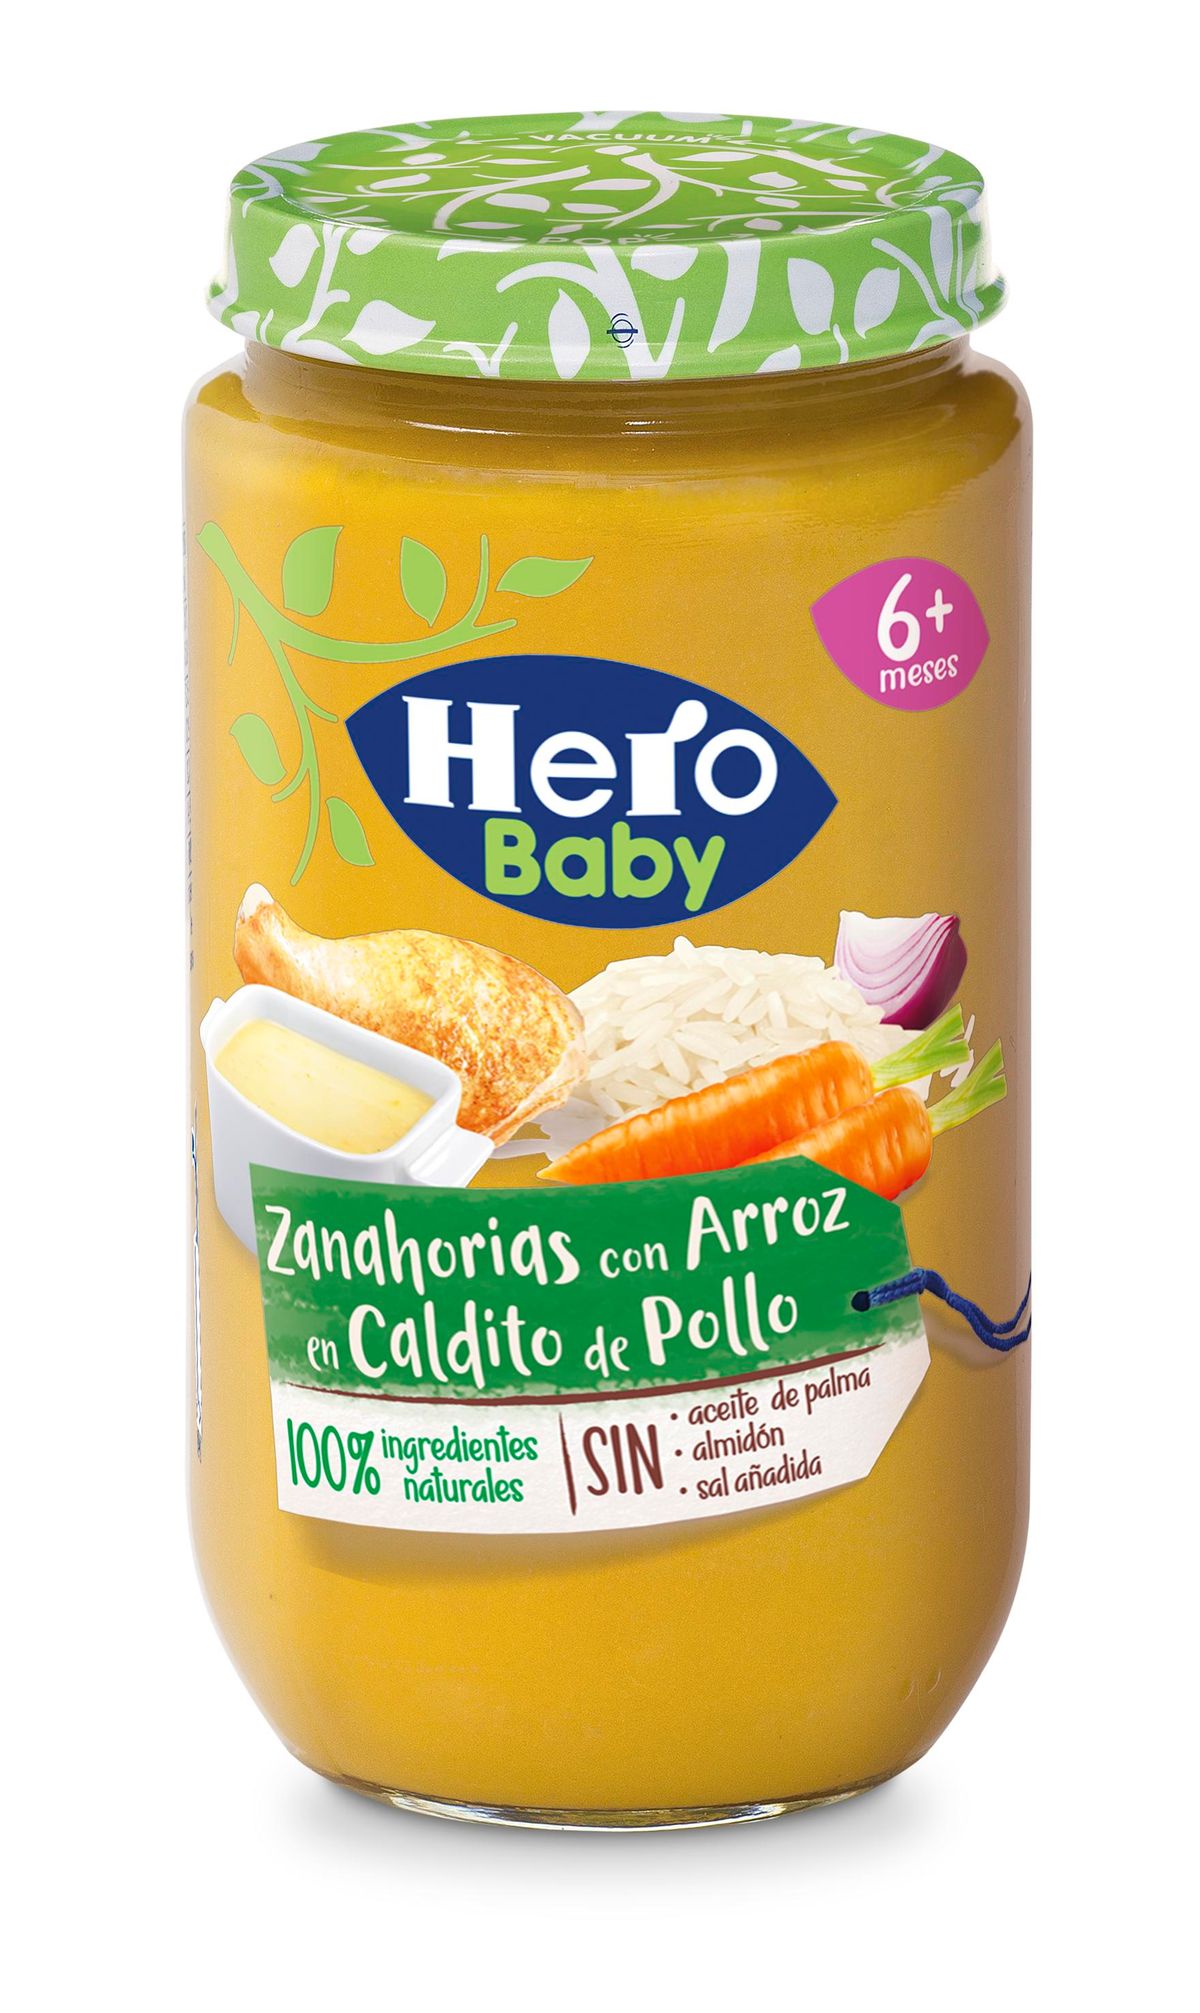 Tarro Hero baby zanahoria-arroz en caldo 235g